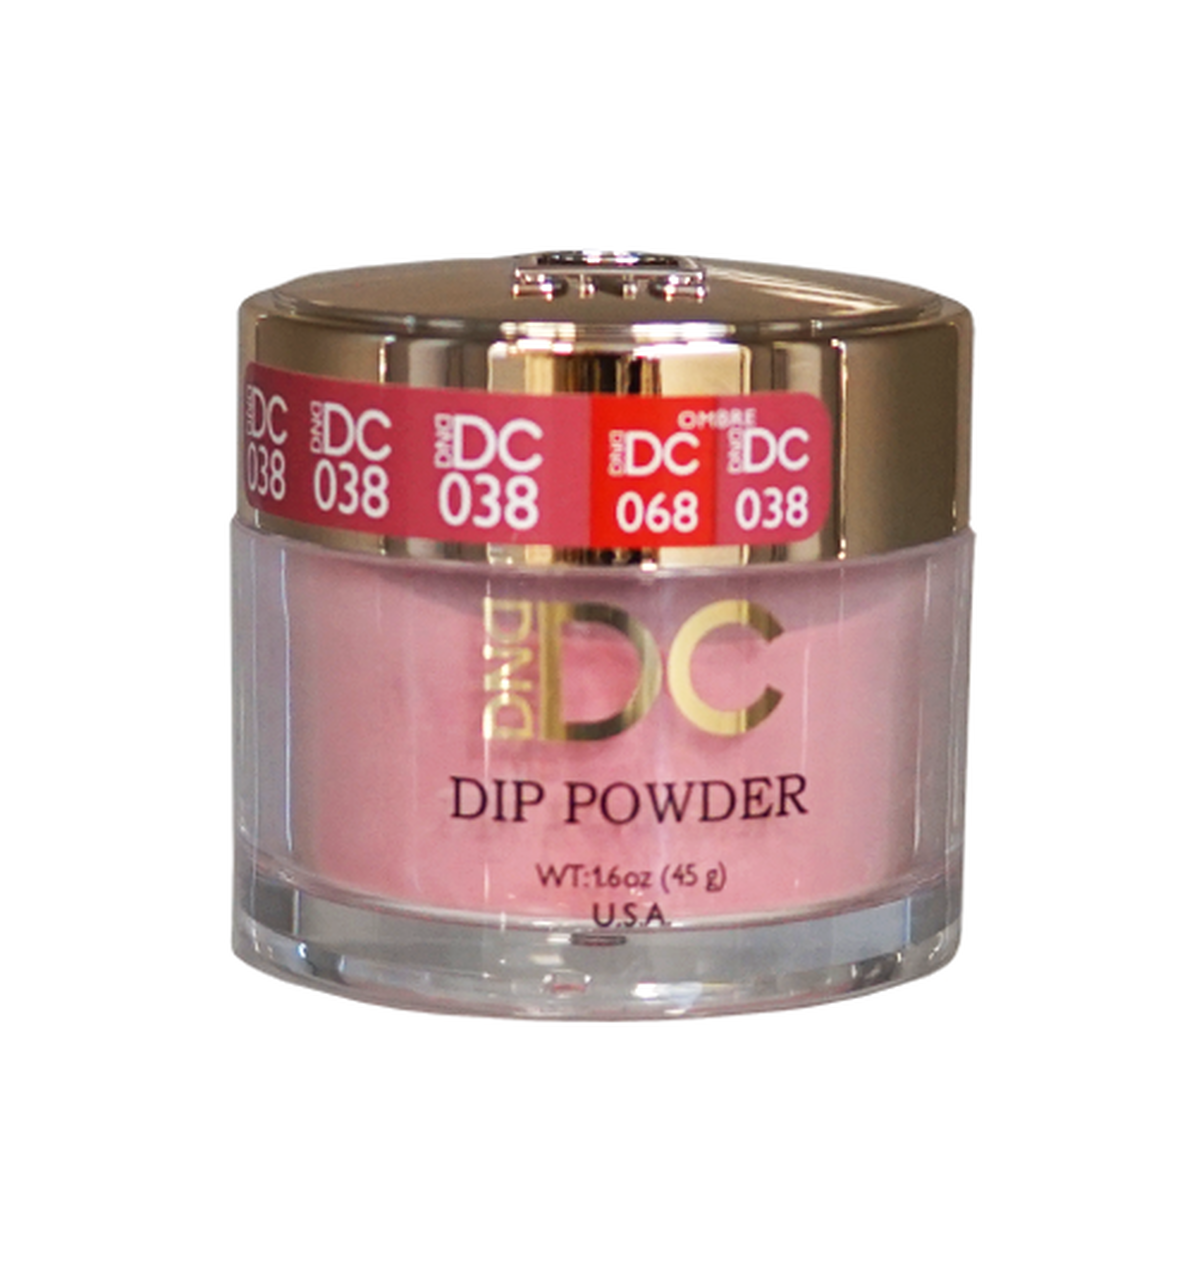 DND DC Acrylic & Dip Powder - DC038 Mahogany